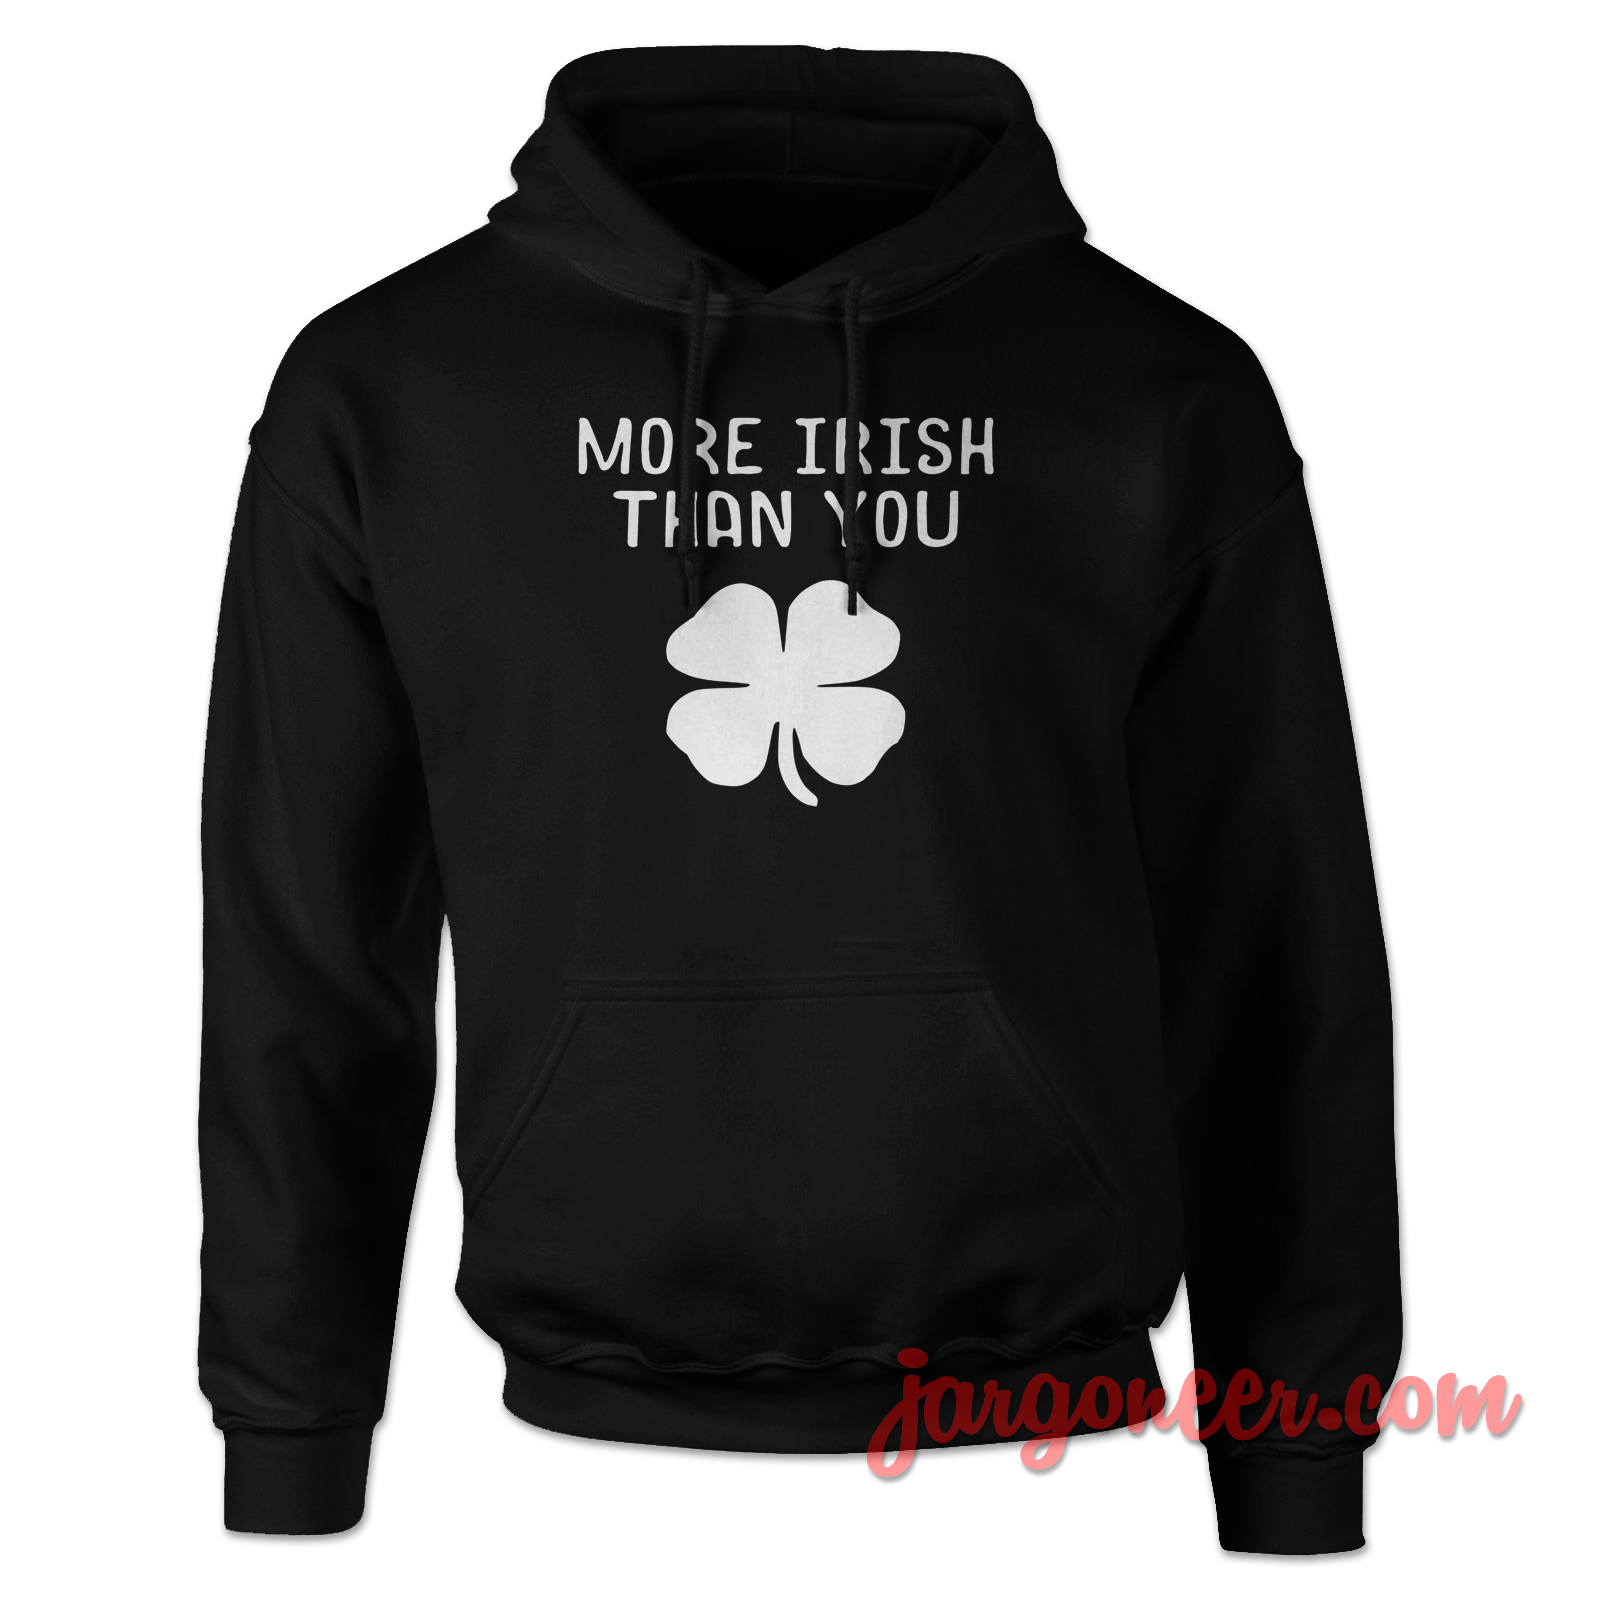 More Irish Than You 2 - Shop Unique Graphic Cool Shirt Designs